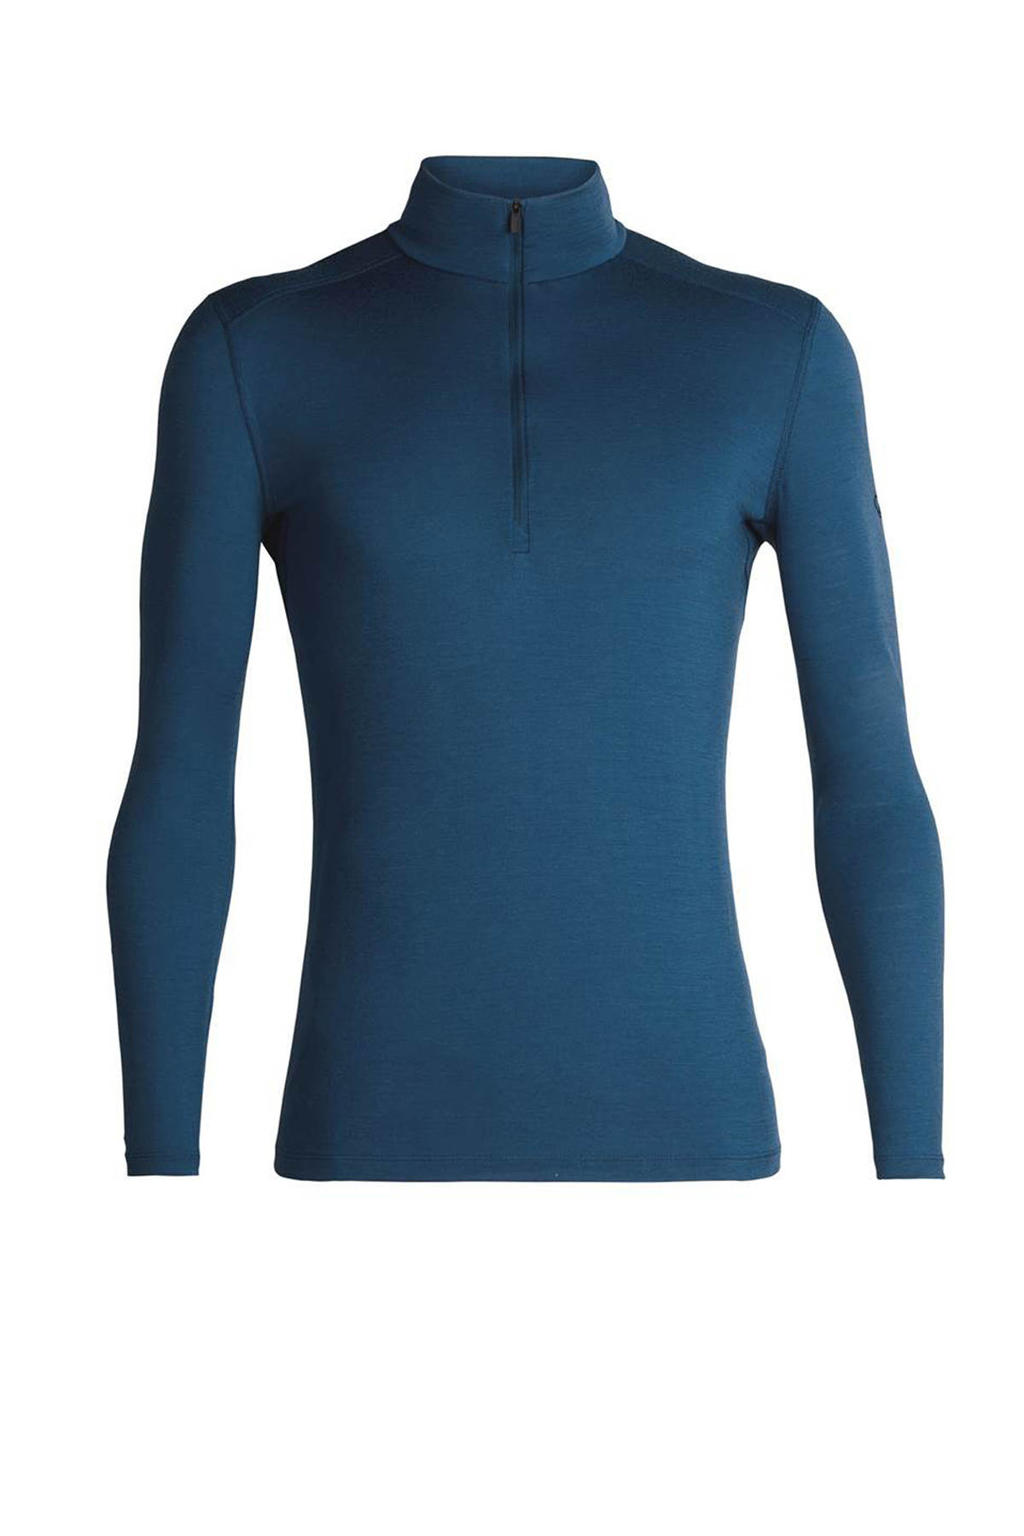 Icebreaker 200 sport T-shirt merinowol donkerblauw